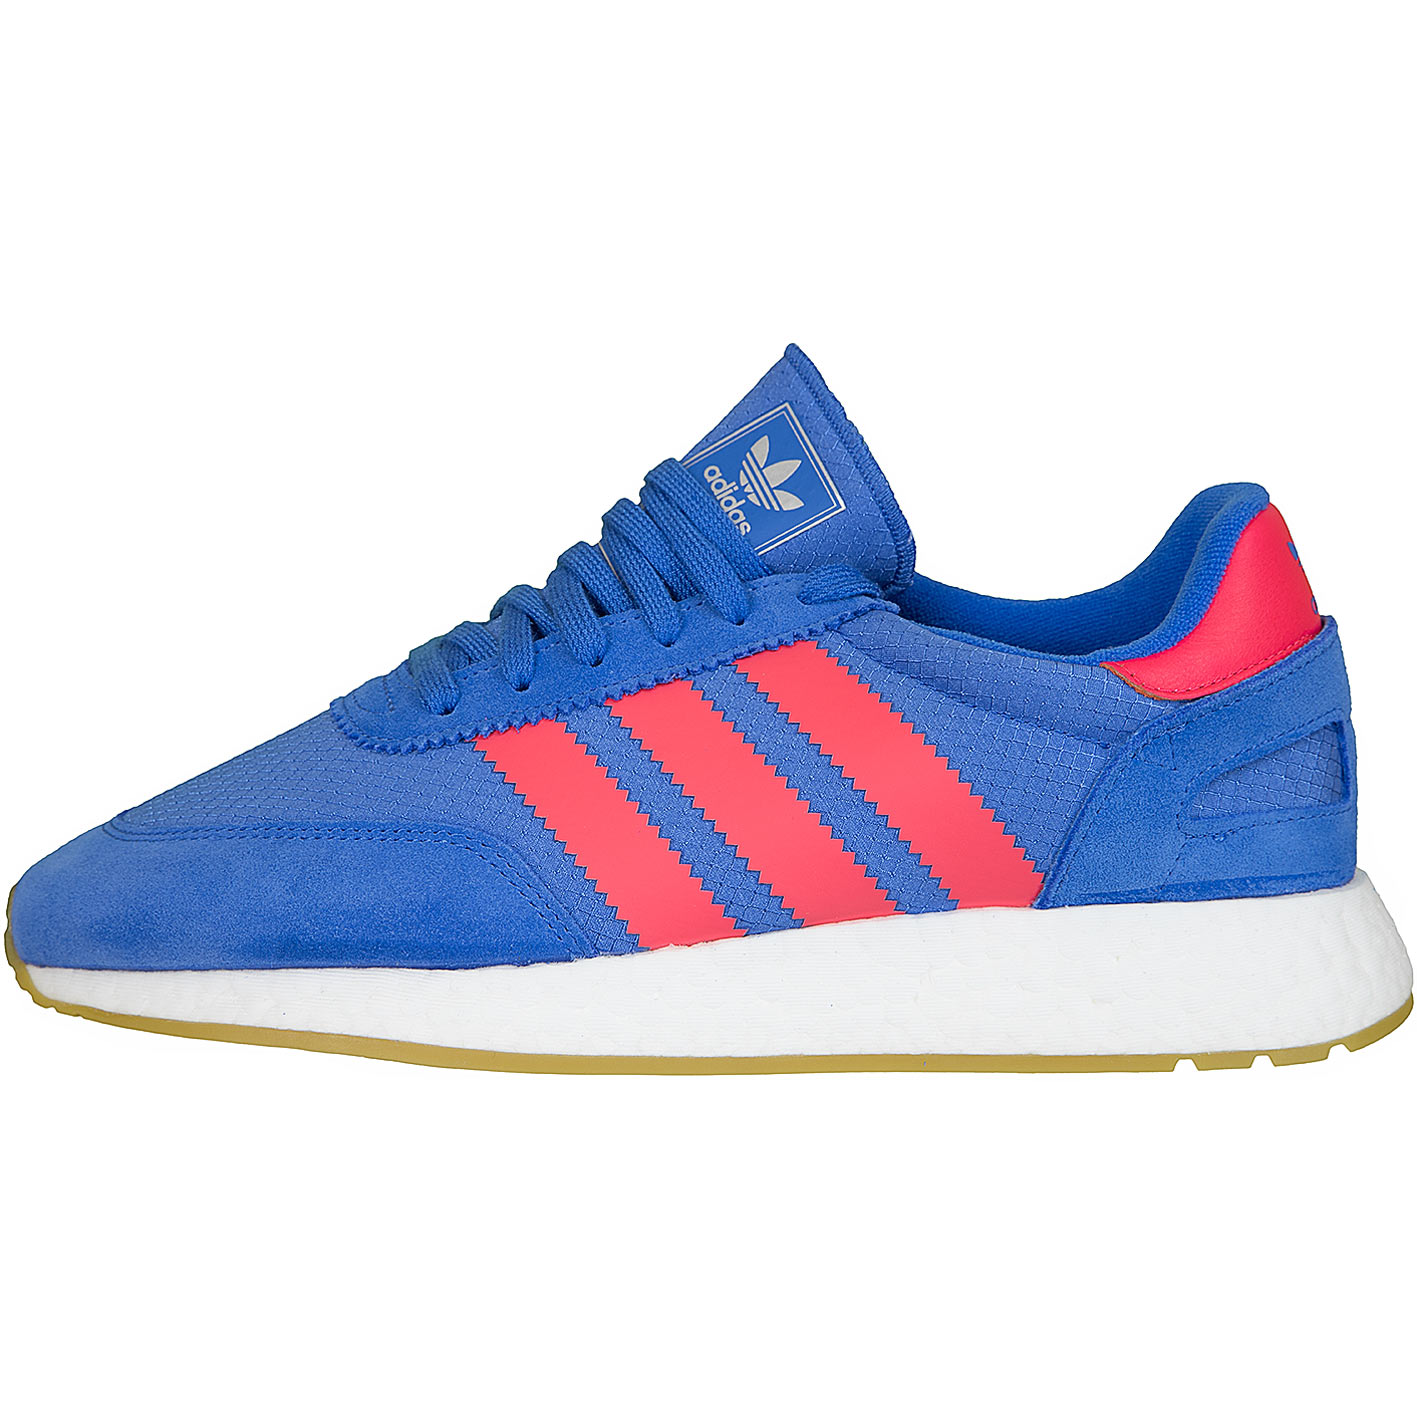 ☆ Adidas Originals Sneaker I-5923 blau/rot - hier bestellen!